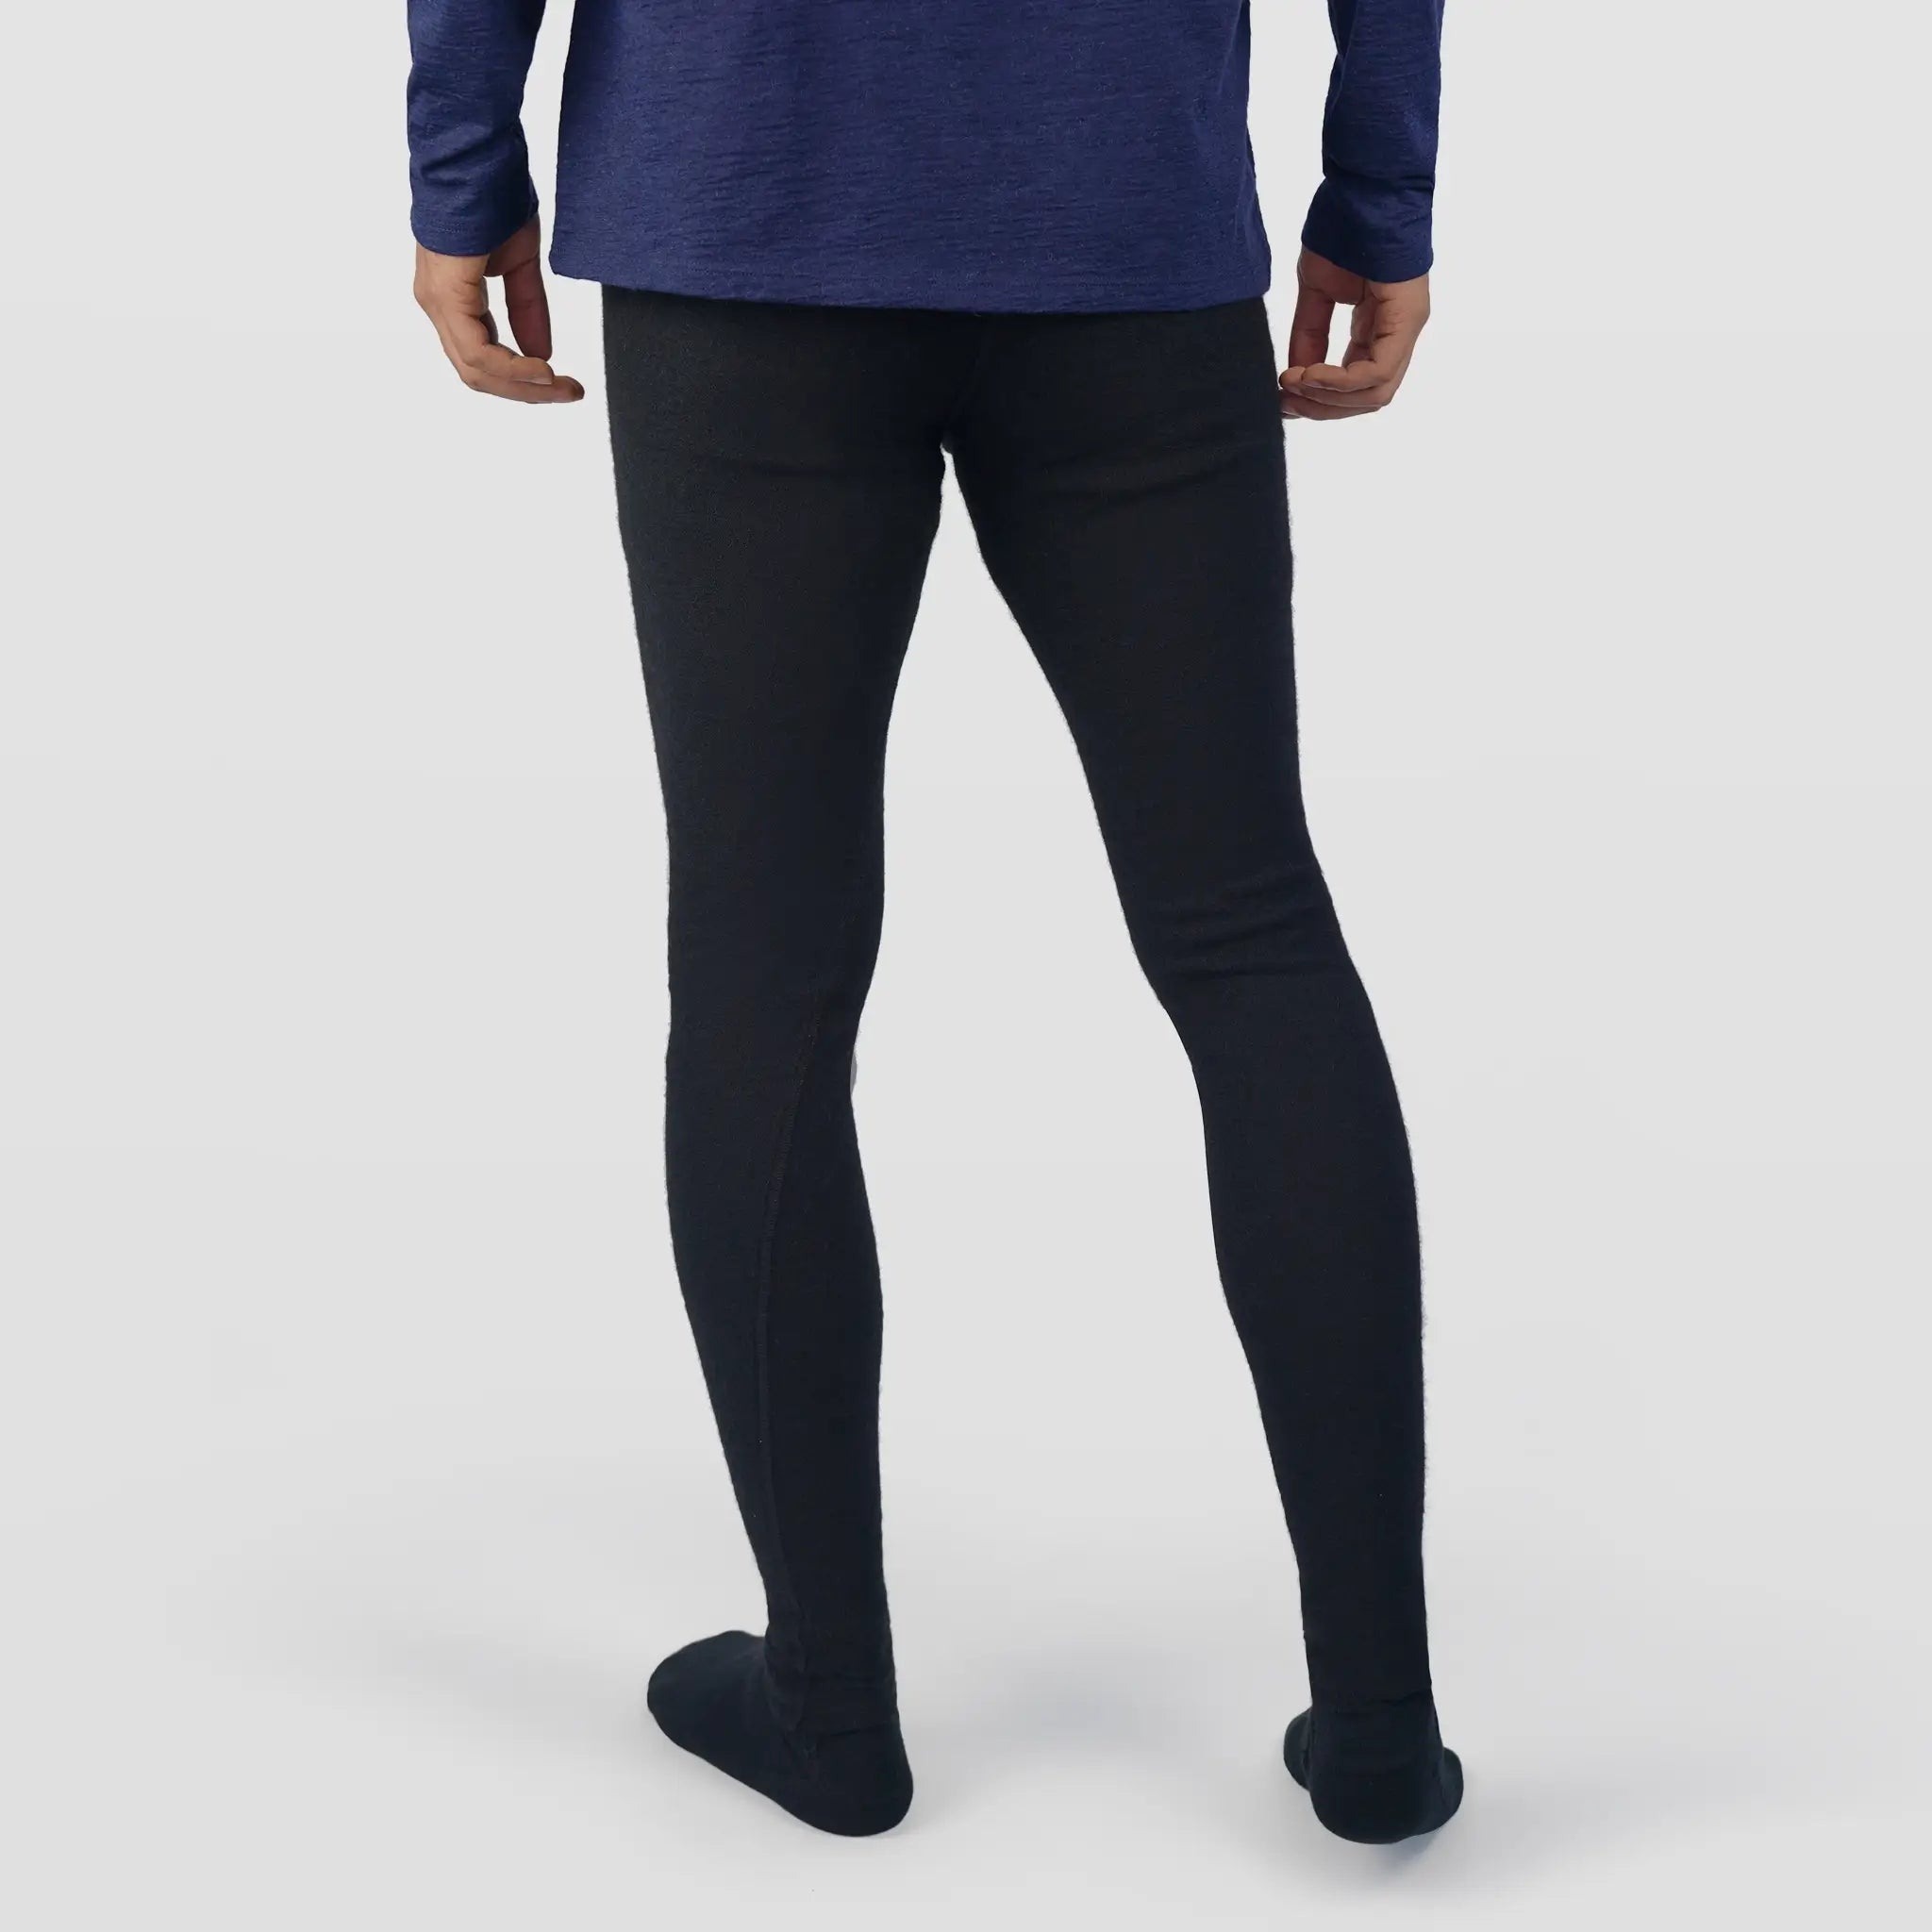 mens sustainable leggings lightweight 250 color black